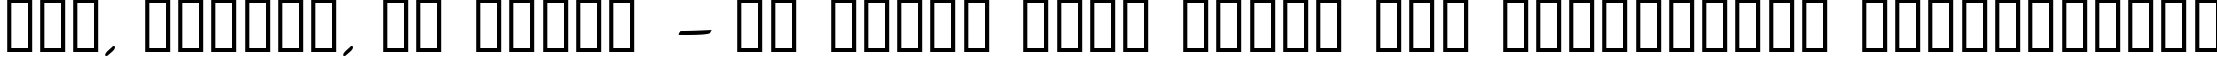 Пример написания шрифтом SF Scribbled Sans SC Bold Italic текста на украинском